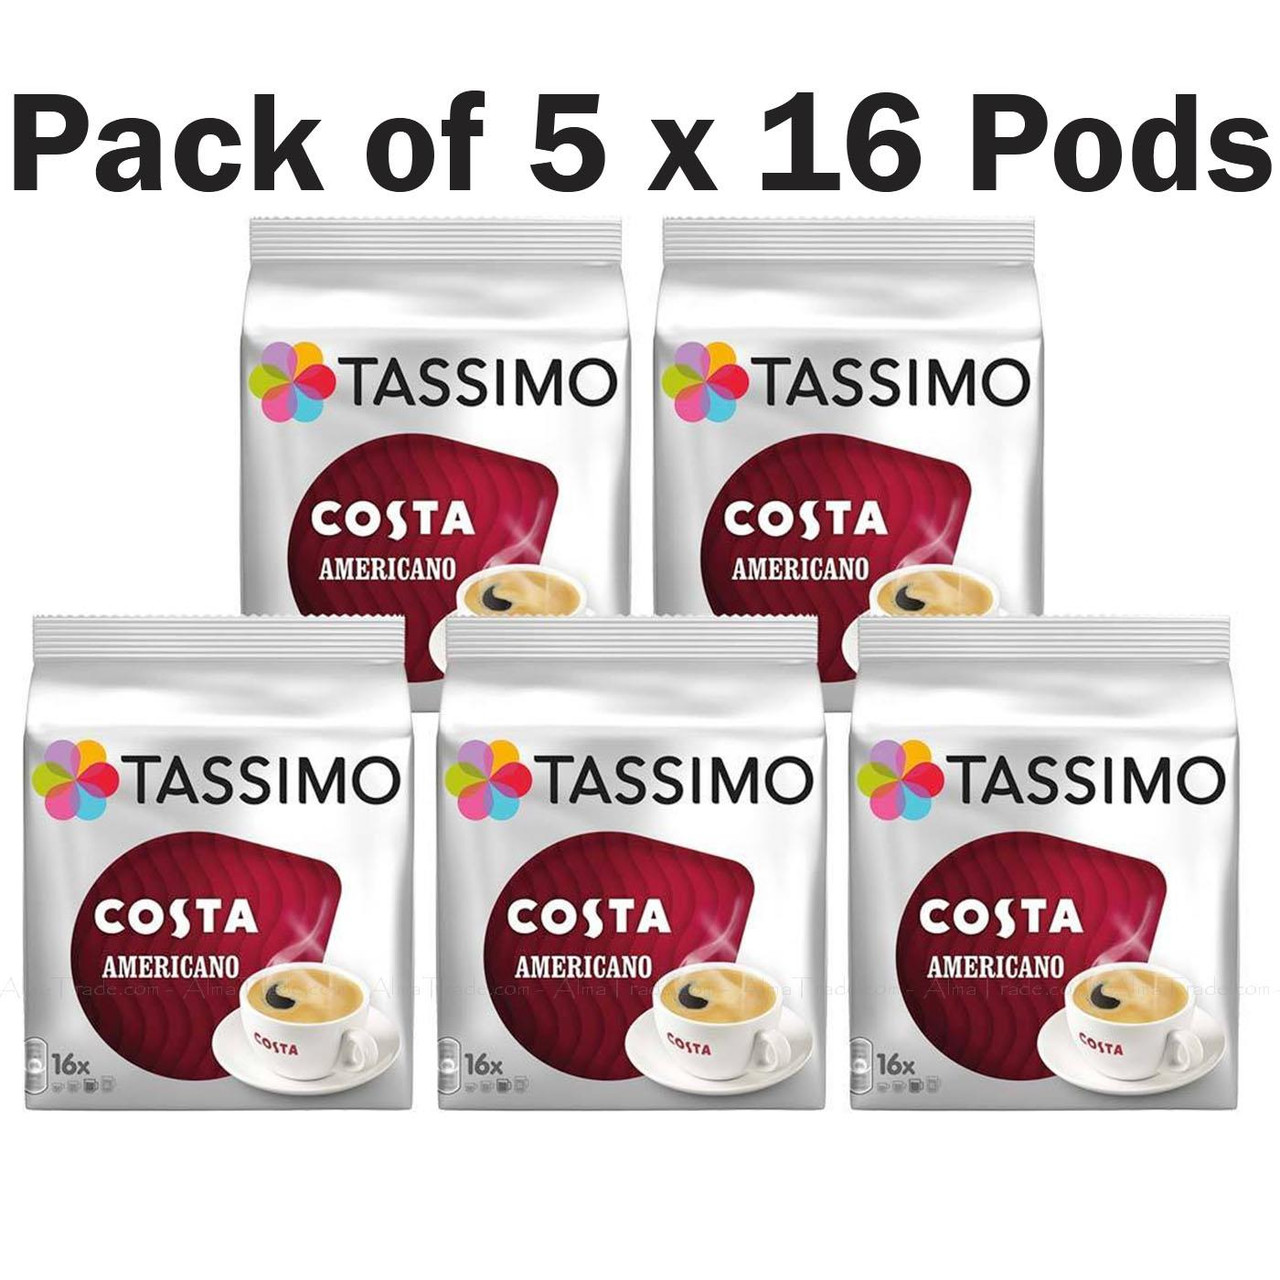 TASSIMO Cadbury Hot Chocolate Drink 16 discs, 8 servings (Pack of 5, Total  80 discs, 40 servings)